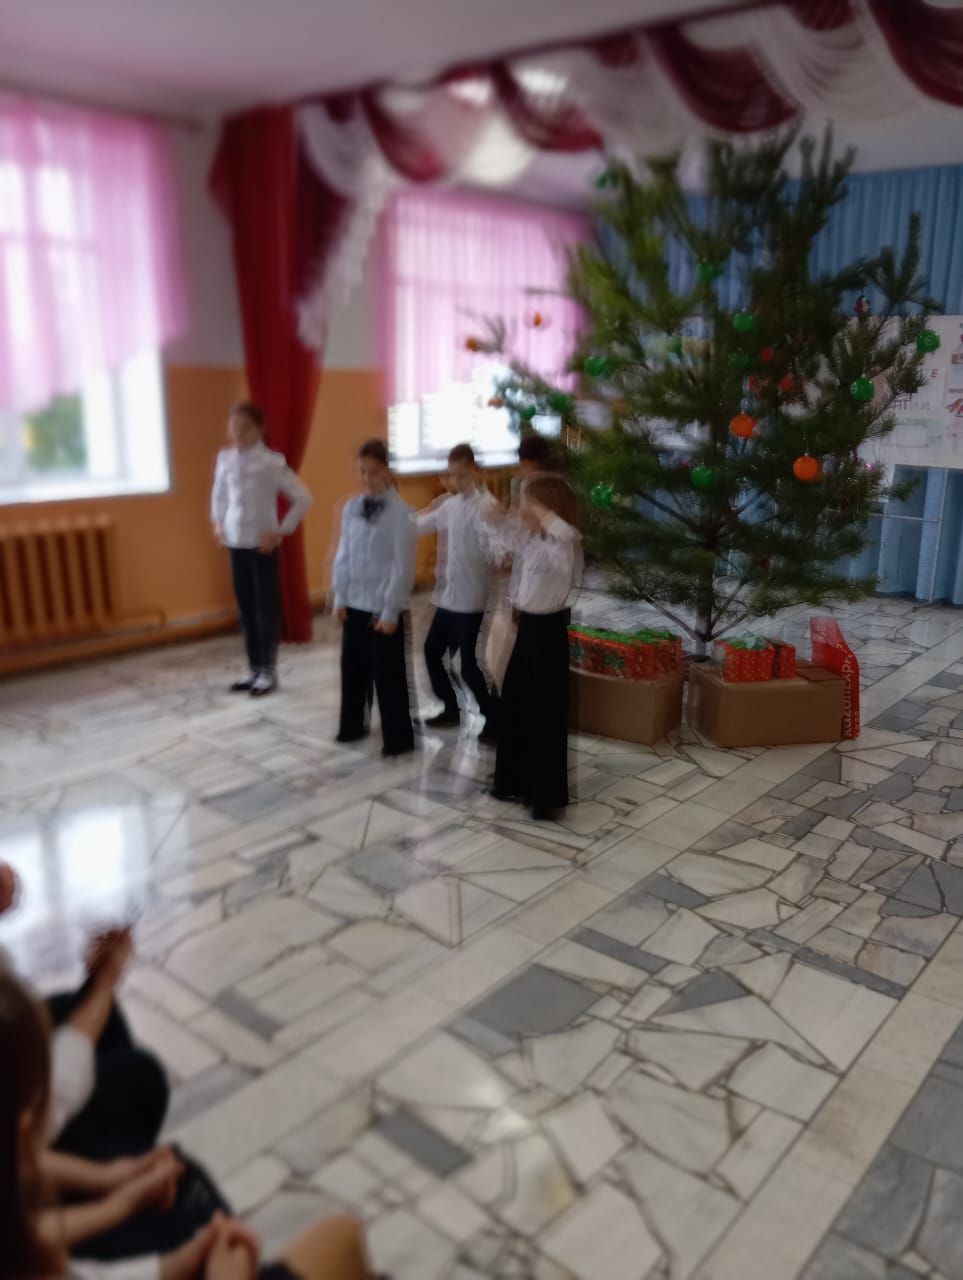 В Убеевской сош Дрожжановского района РТ прошла акция «Дари Добро»